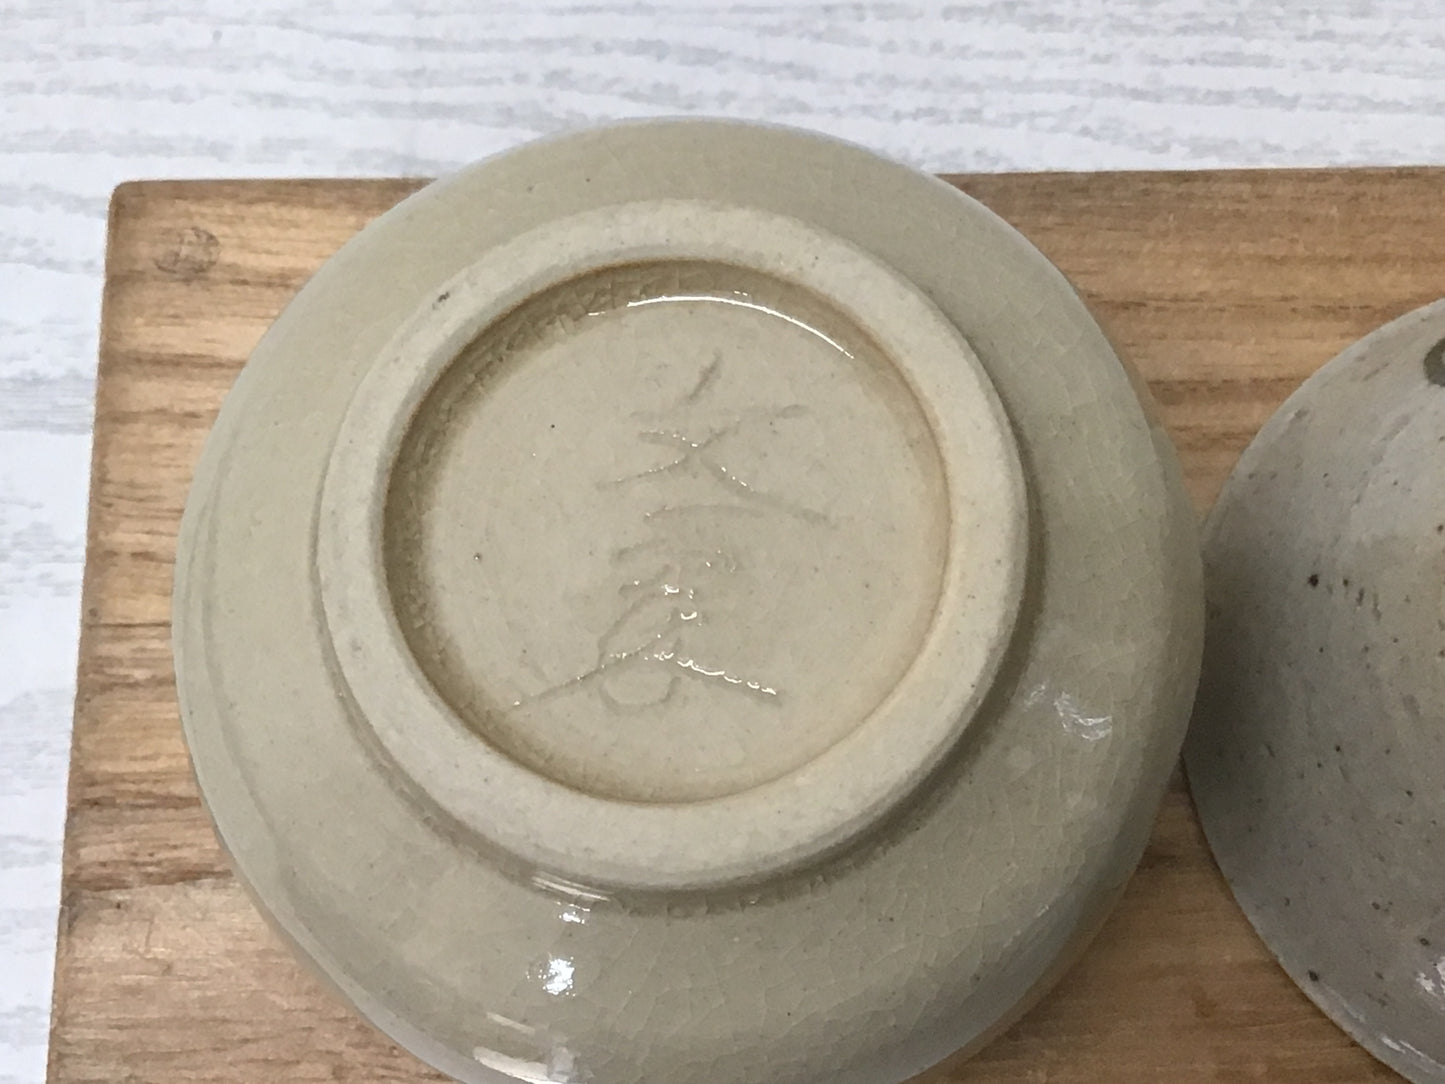 Y2002 CHAWAN Seto-ware Sake Cup signed box set of 3 Japanese bowl pottery